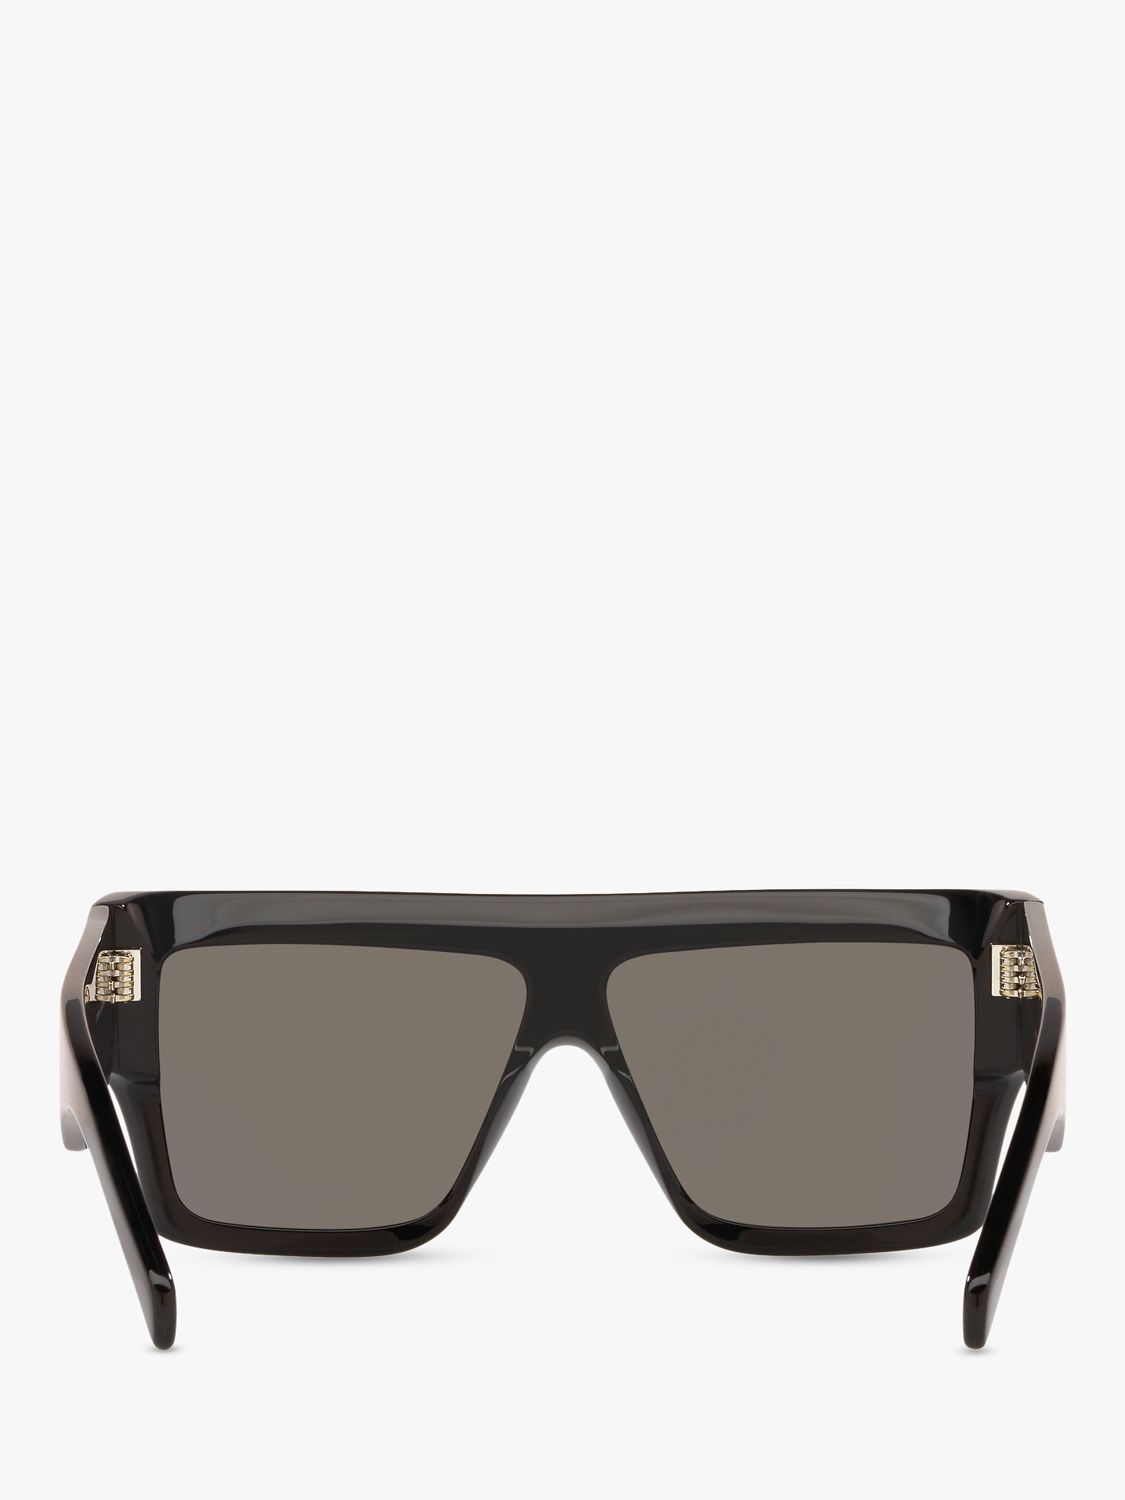 Celine CL000240 Women's Square Sunglasses, Shiny Black/Grey at John Lewis &  Partners